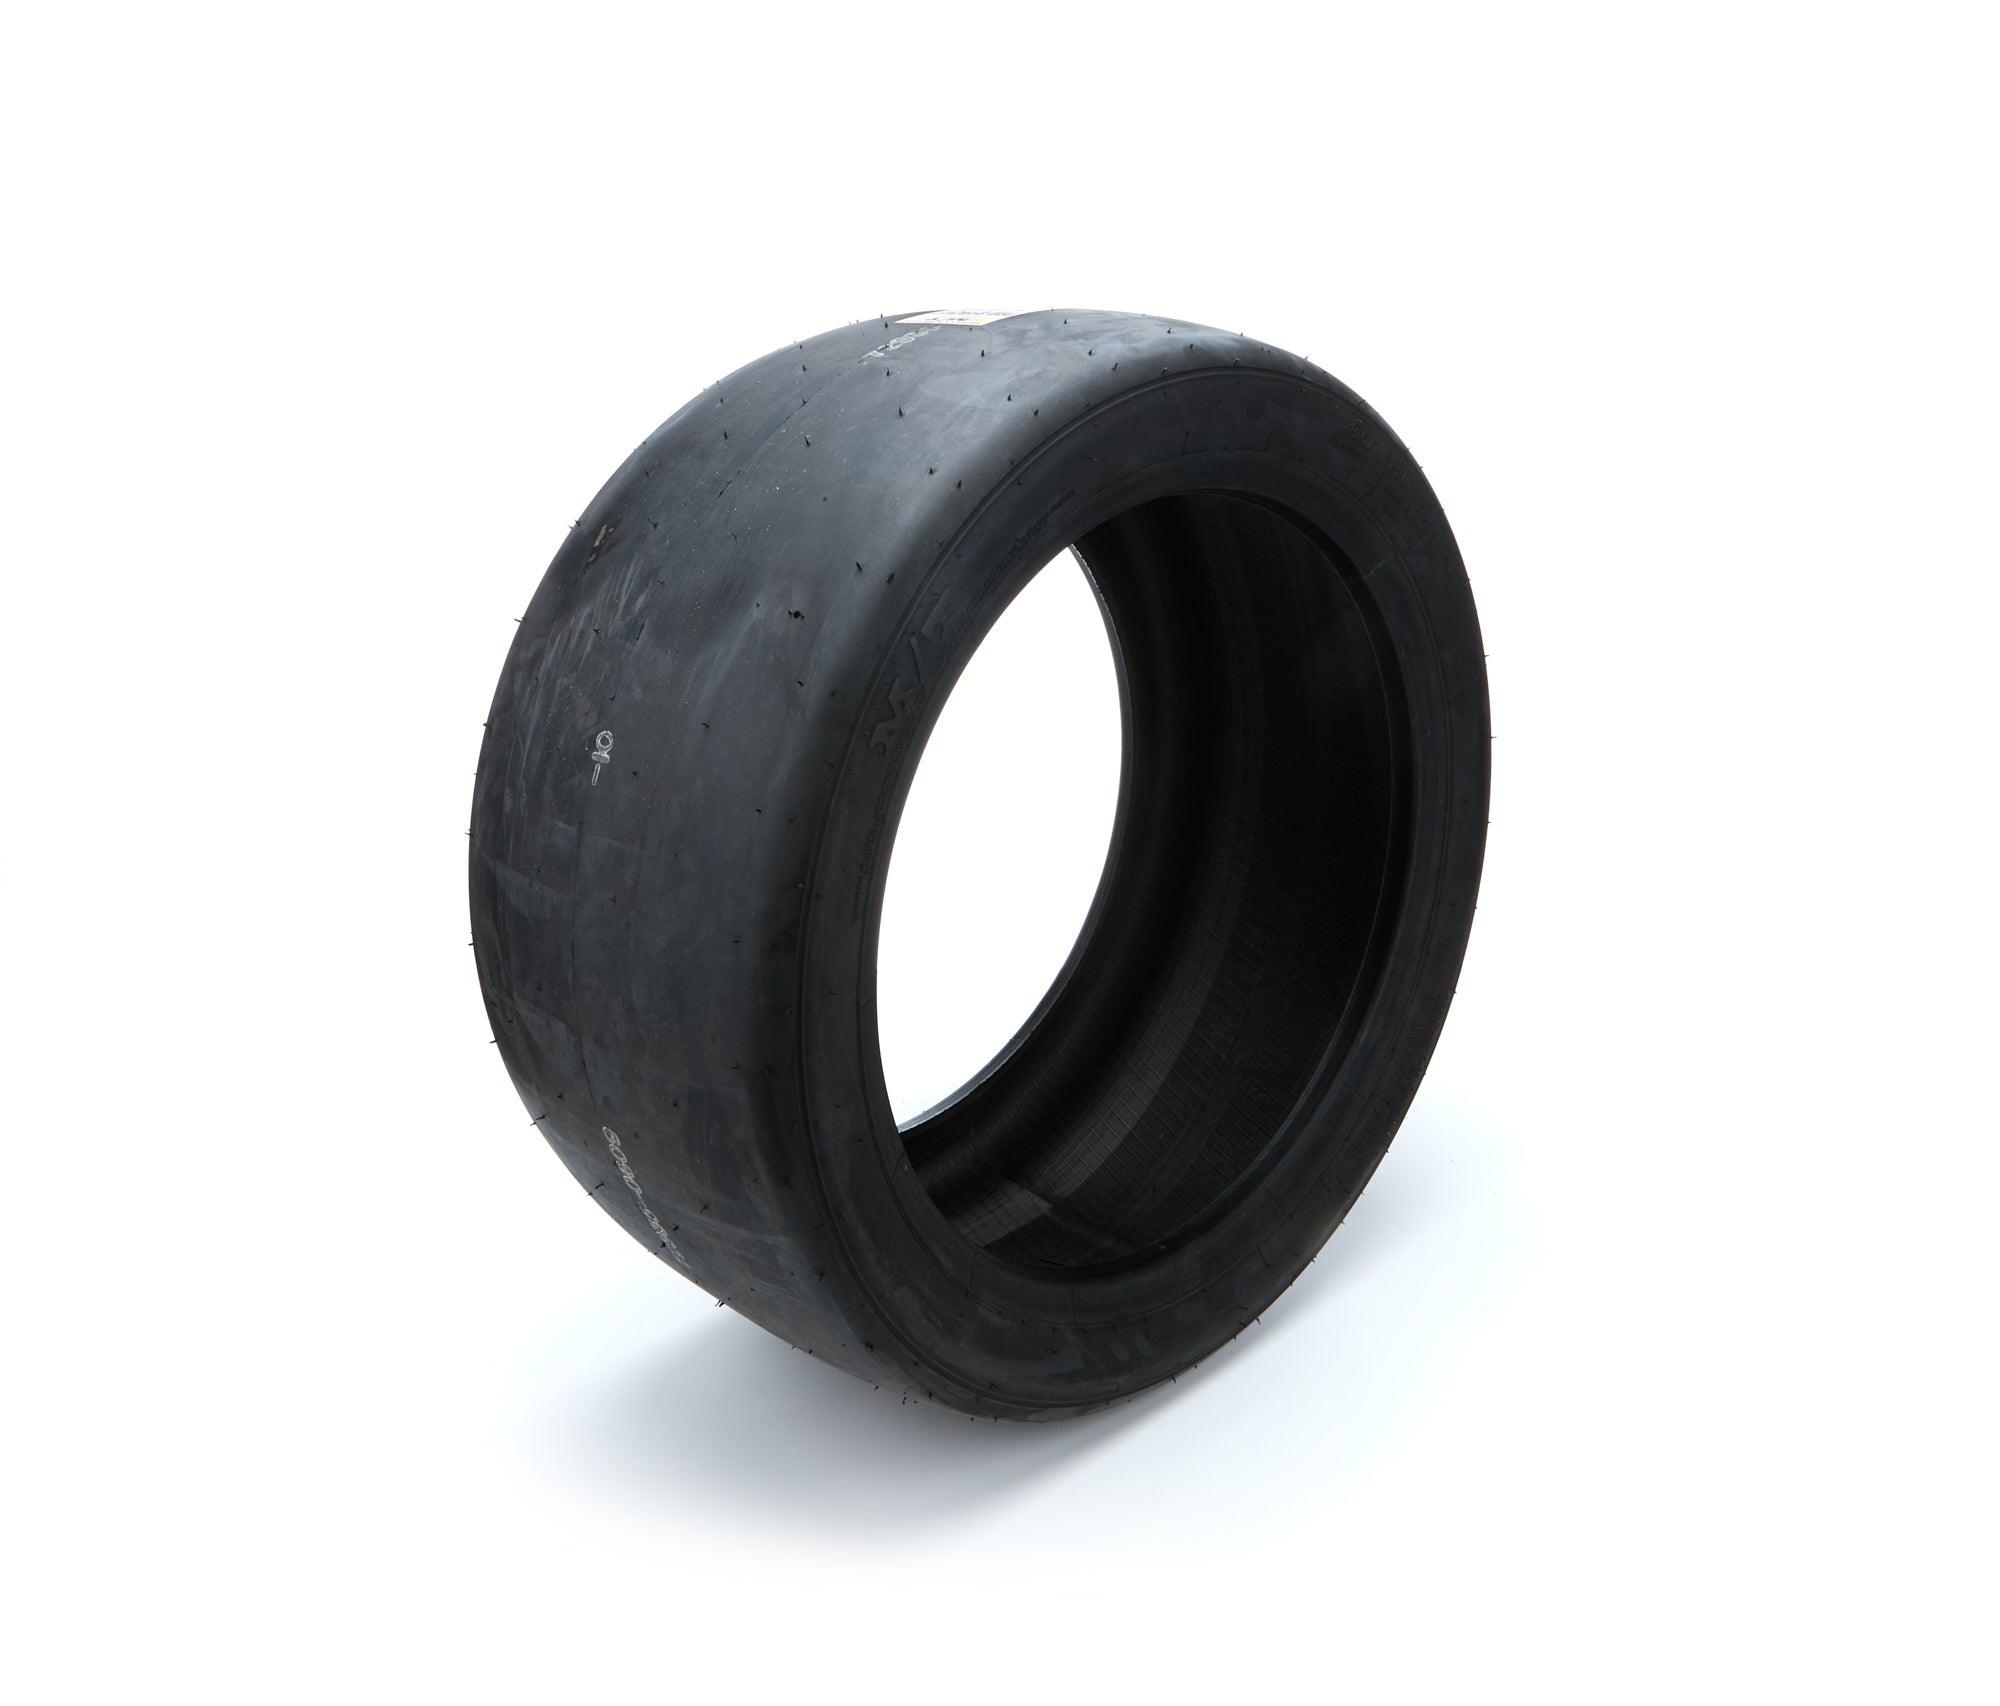 29.0/11.5R20 Pro-Bracket Drag Radial Tire - Burlile Performance Products